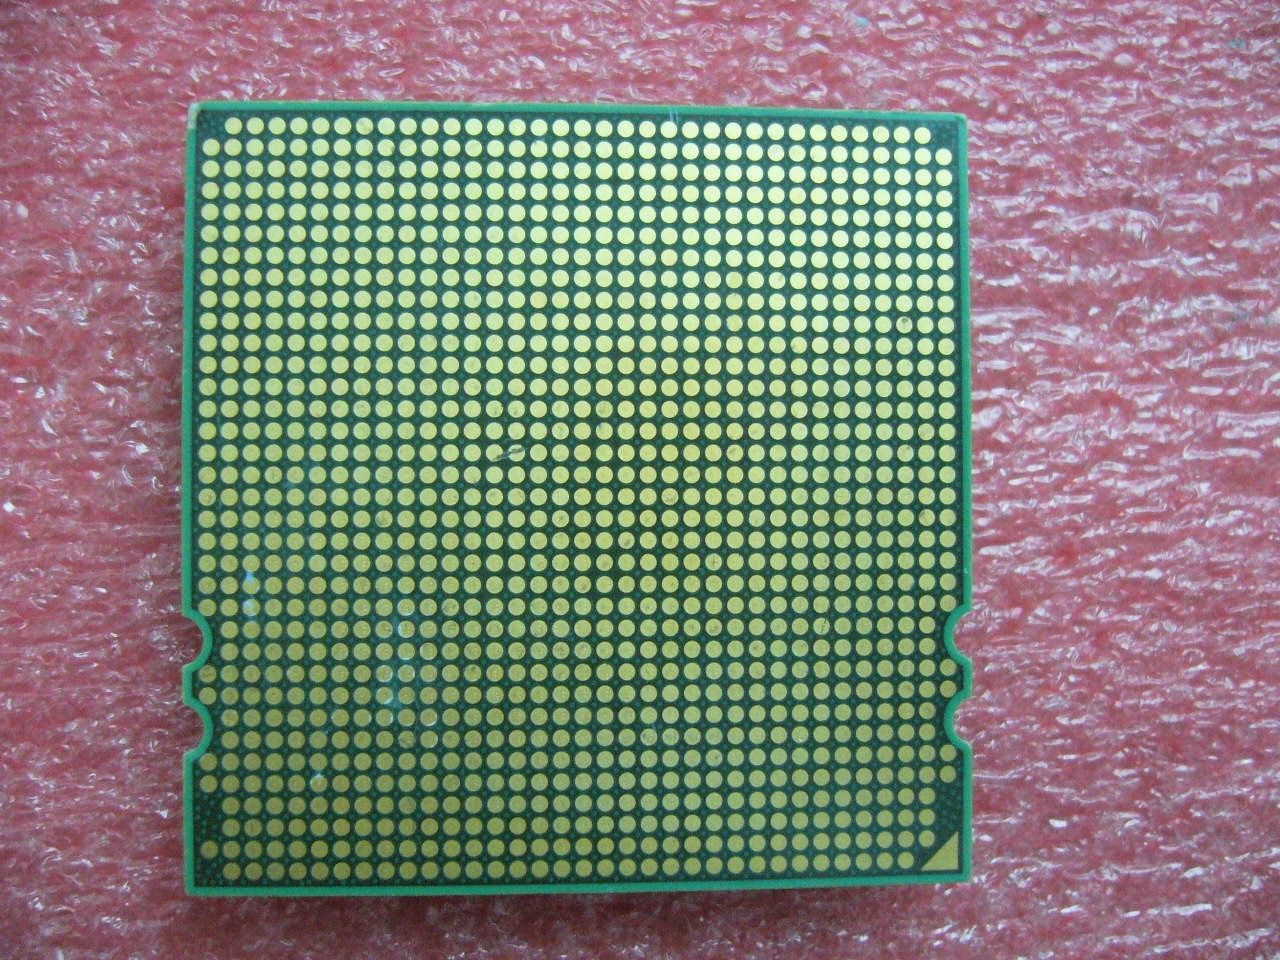 QTY 1x AMD Opteron 2376 HE 2.3 GHz Quad-Core (OS2376PAL4DGI) Socket F 1207 - zum Schließen ins Bild klicken